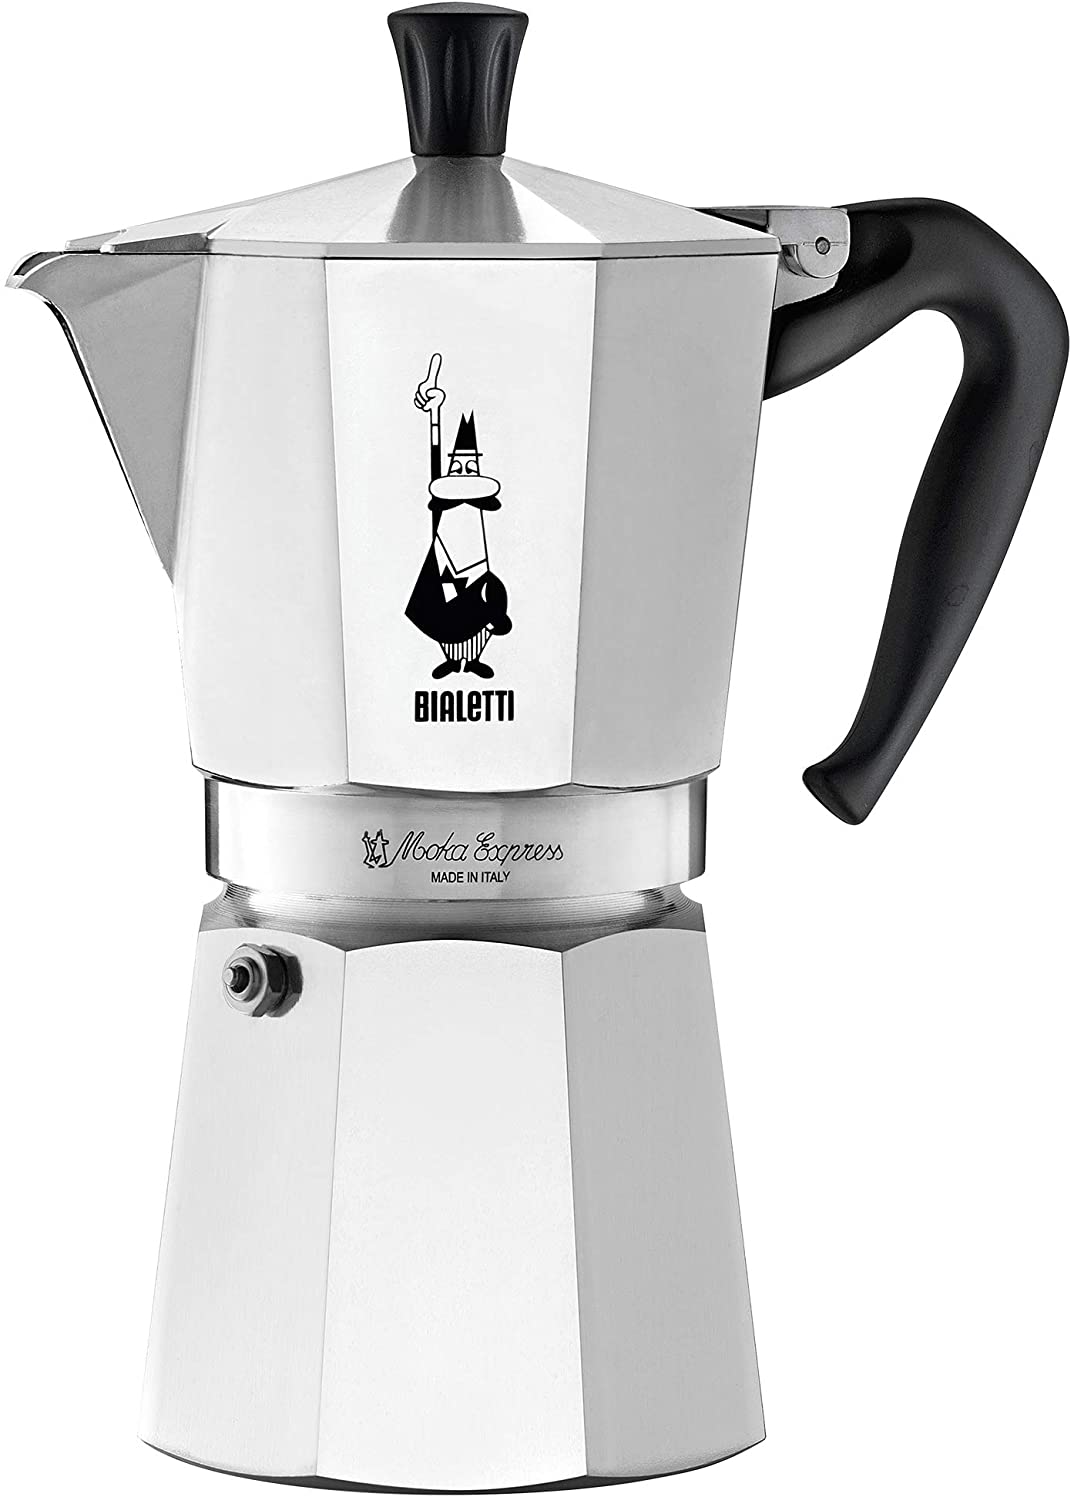 Bialetti 9 Tasses - 420ml MOKA EXPRESS Cafetière Espresso - VENTE D'APRES  NOEL